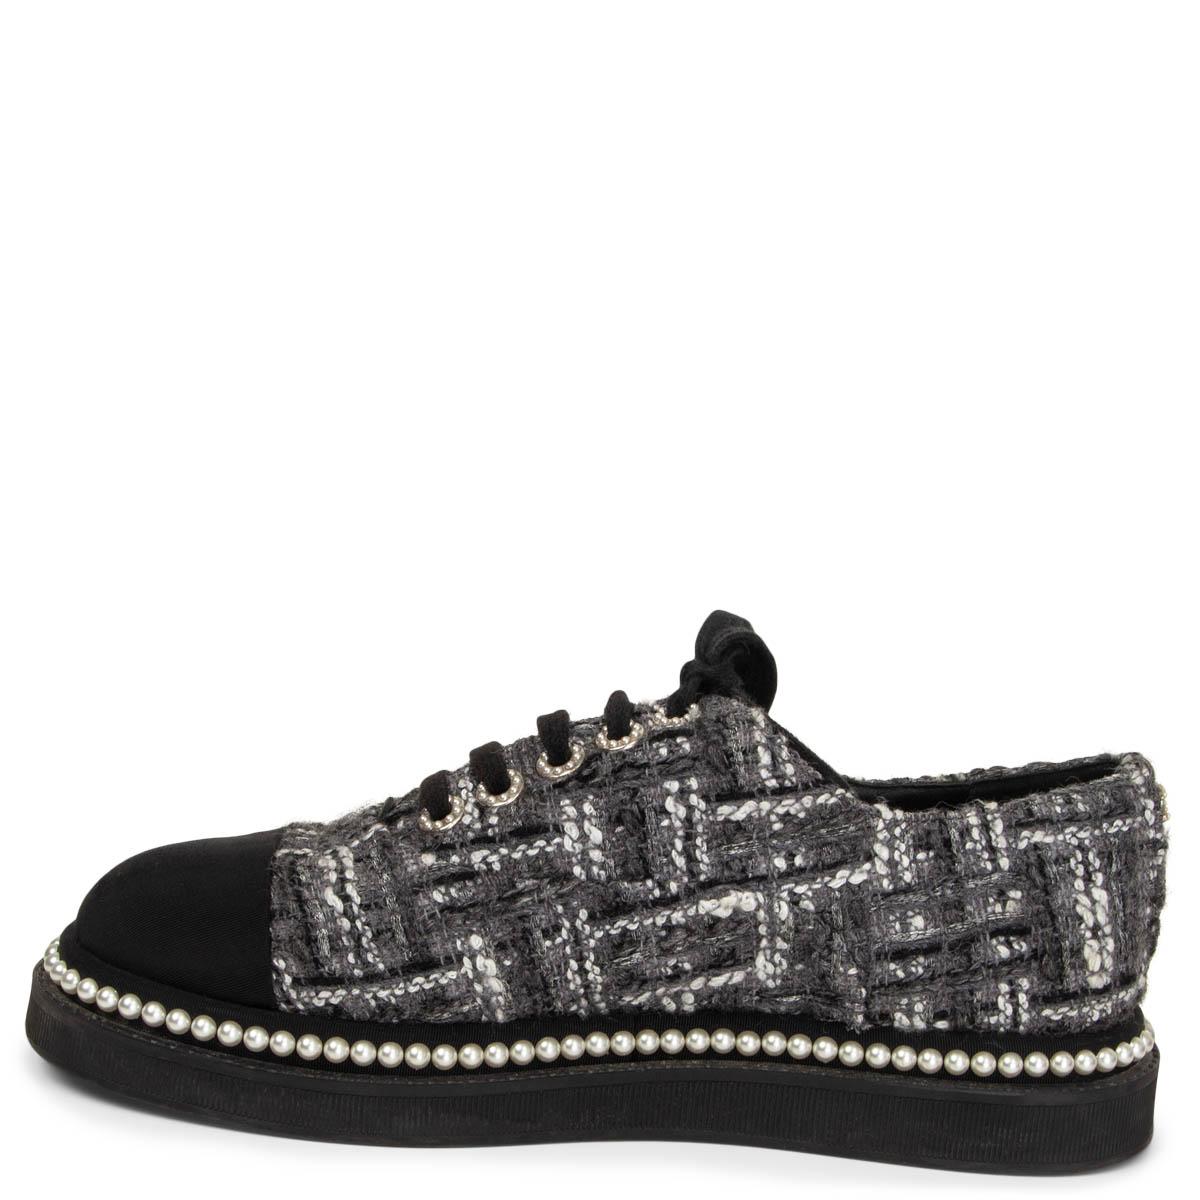 Black CHANEL grey TWEED & PEARL EMBELLISHED Derby Flats Shoes 38.5